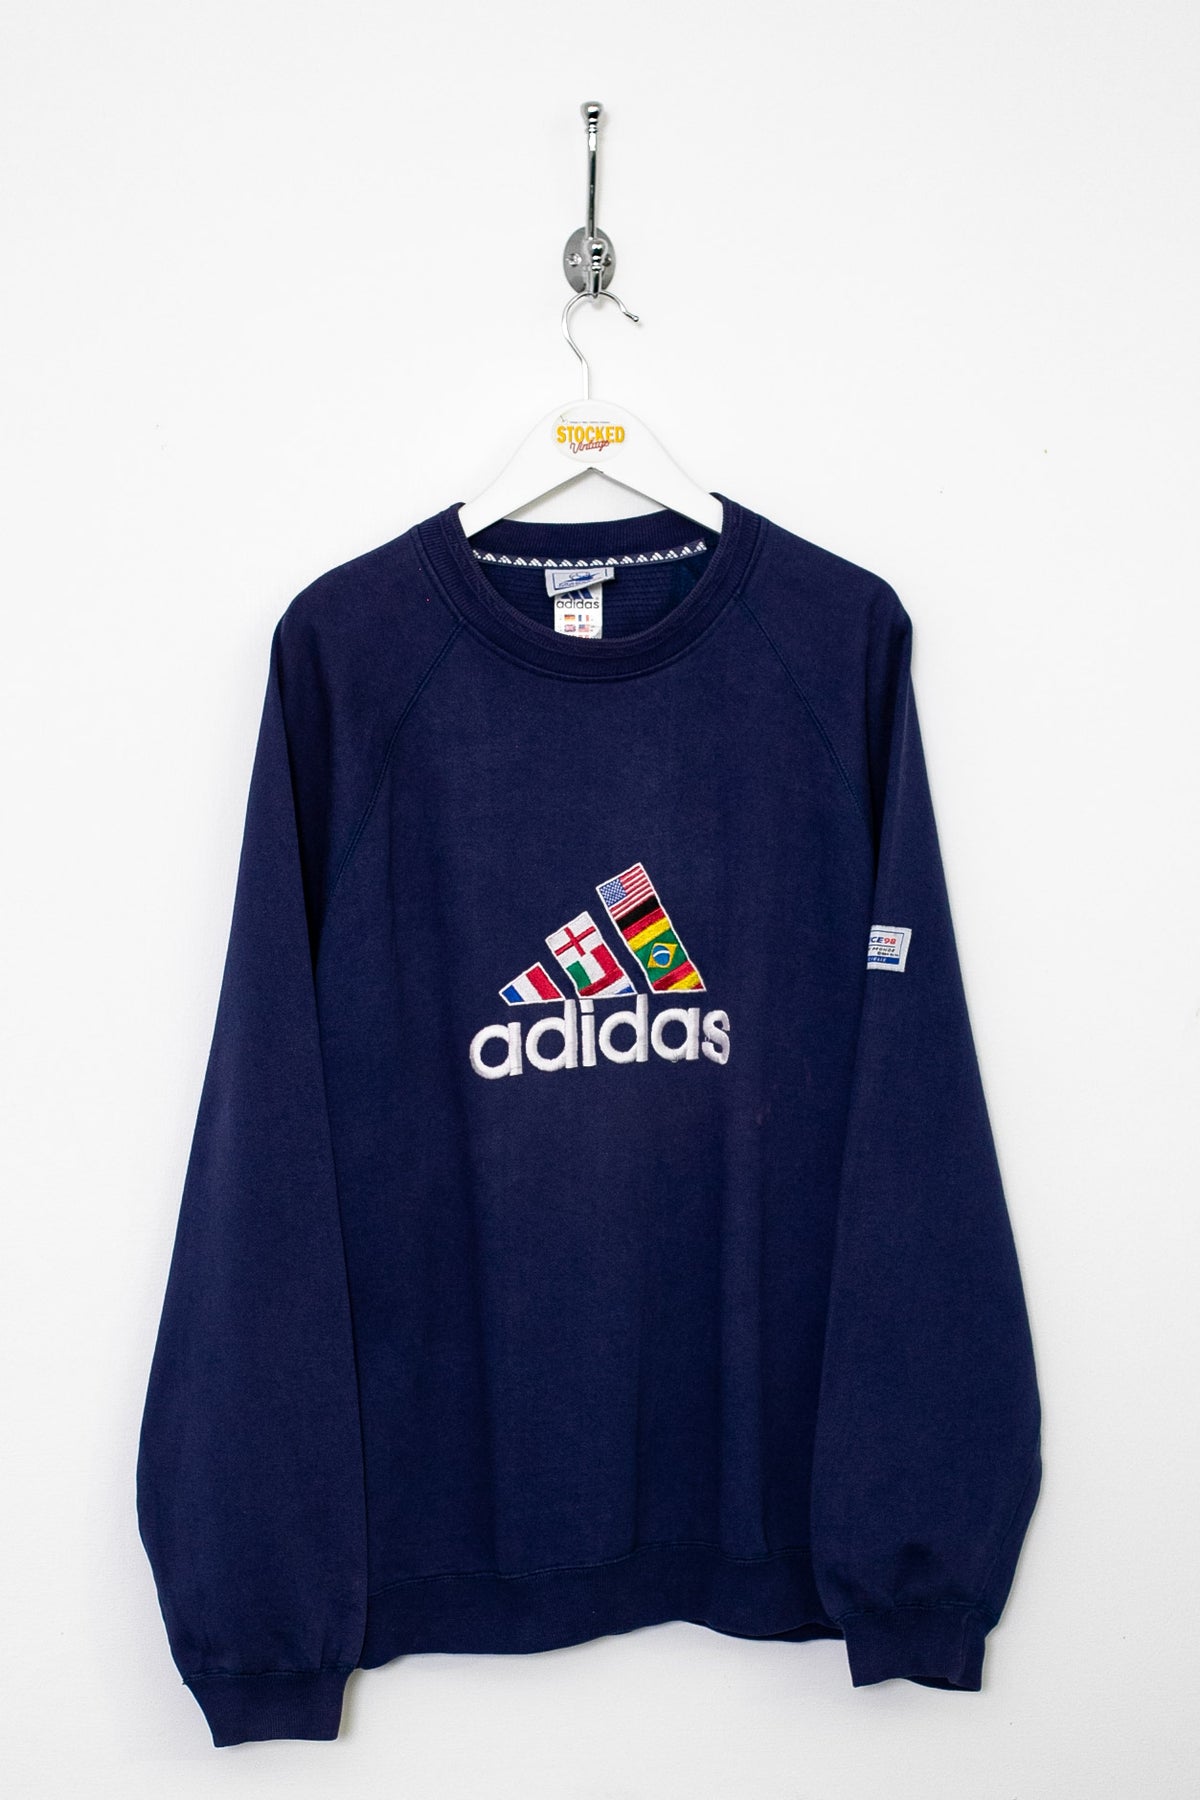 90s Adidas France World Cup Sweatshirt (M)